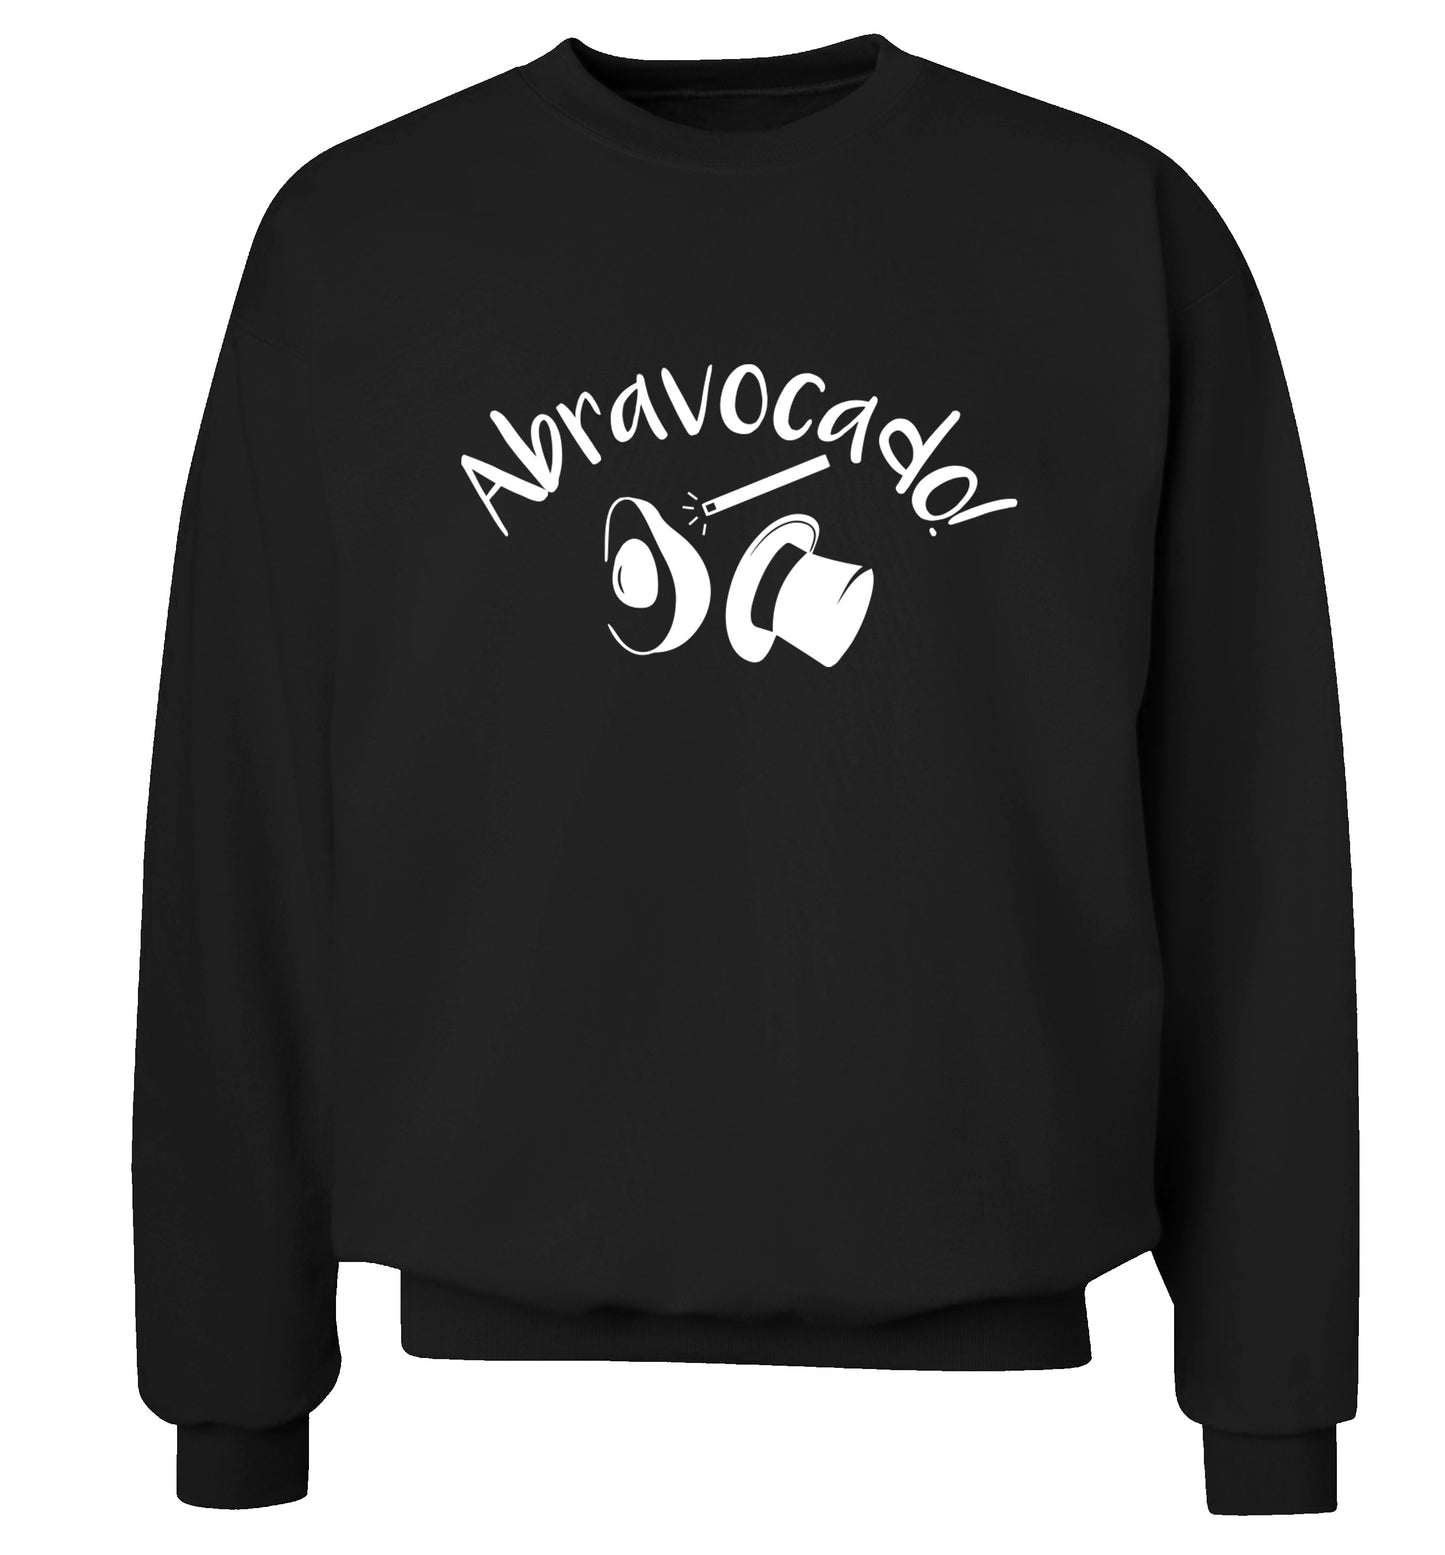 Abravocado Adult's unisex black Sweater 2XL